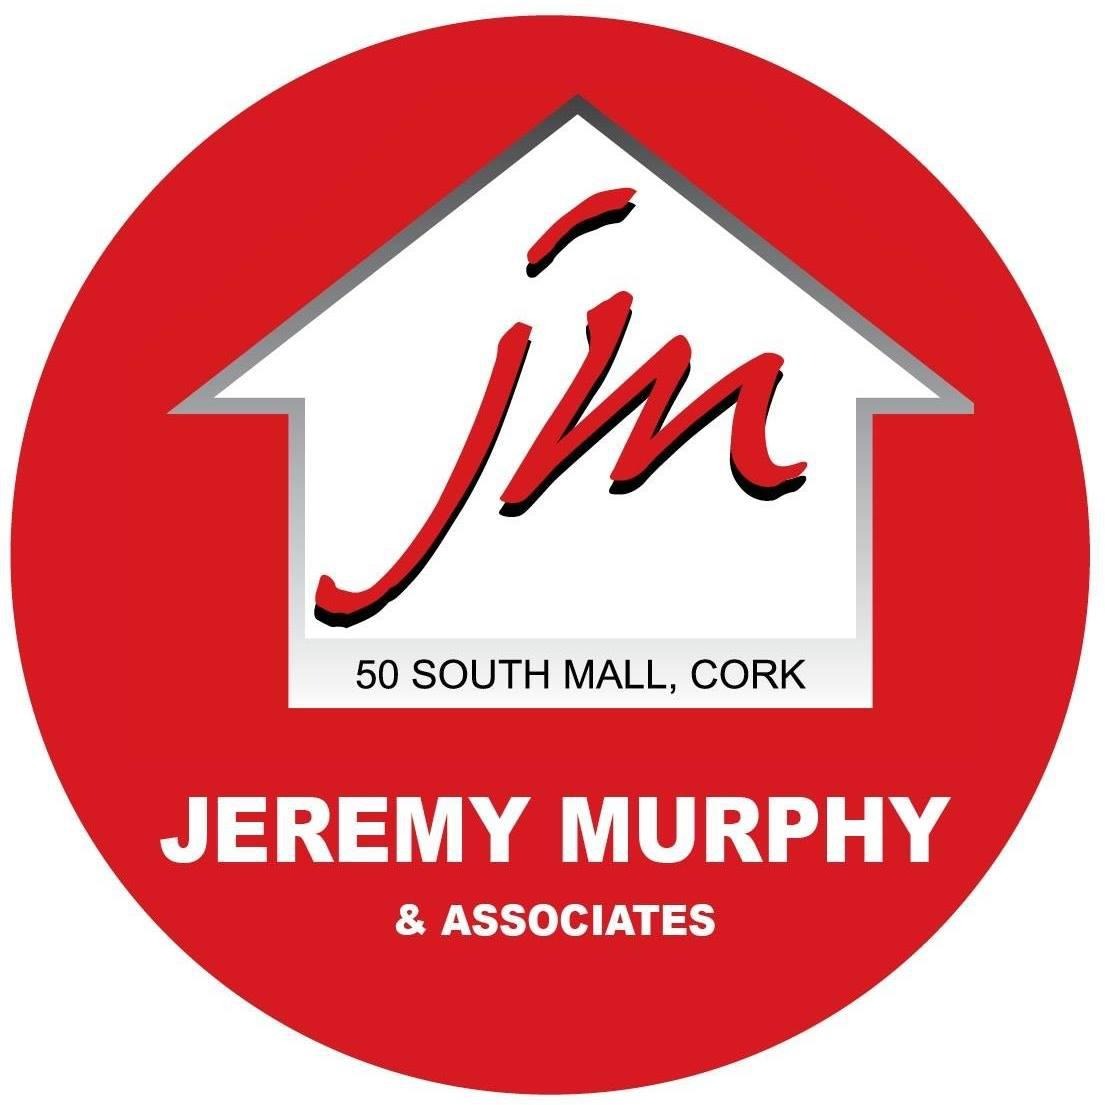 Jeremy Murphy & Associates